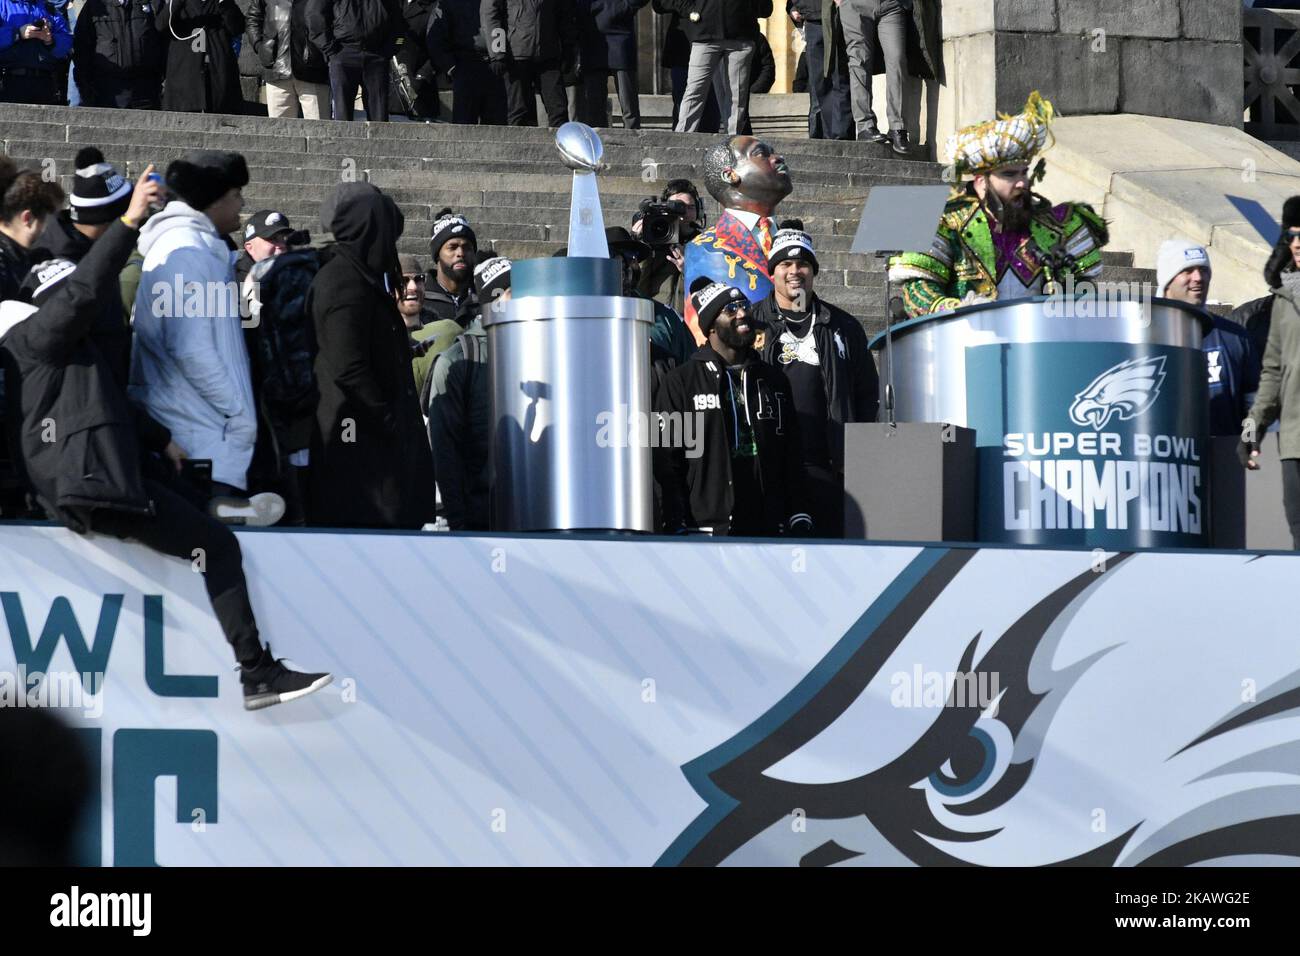 Eagles parade 2018 live updates: Highlights from Philadelphia's Super Bowl  celebration 